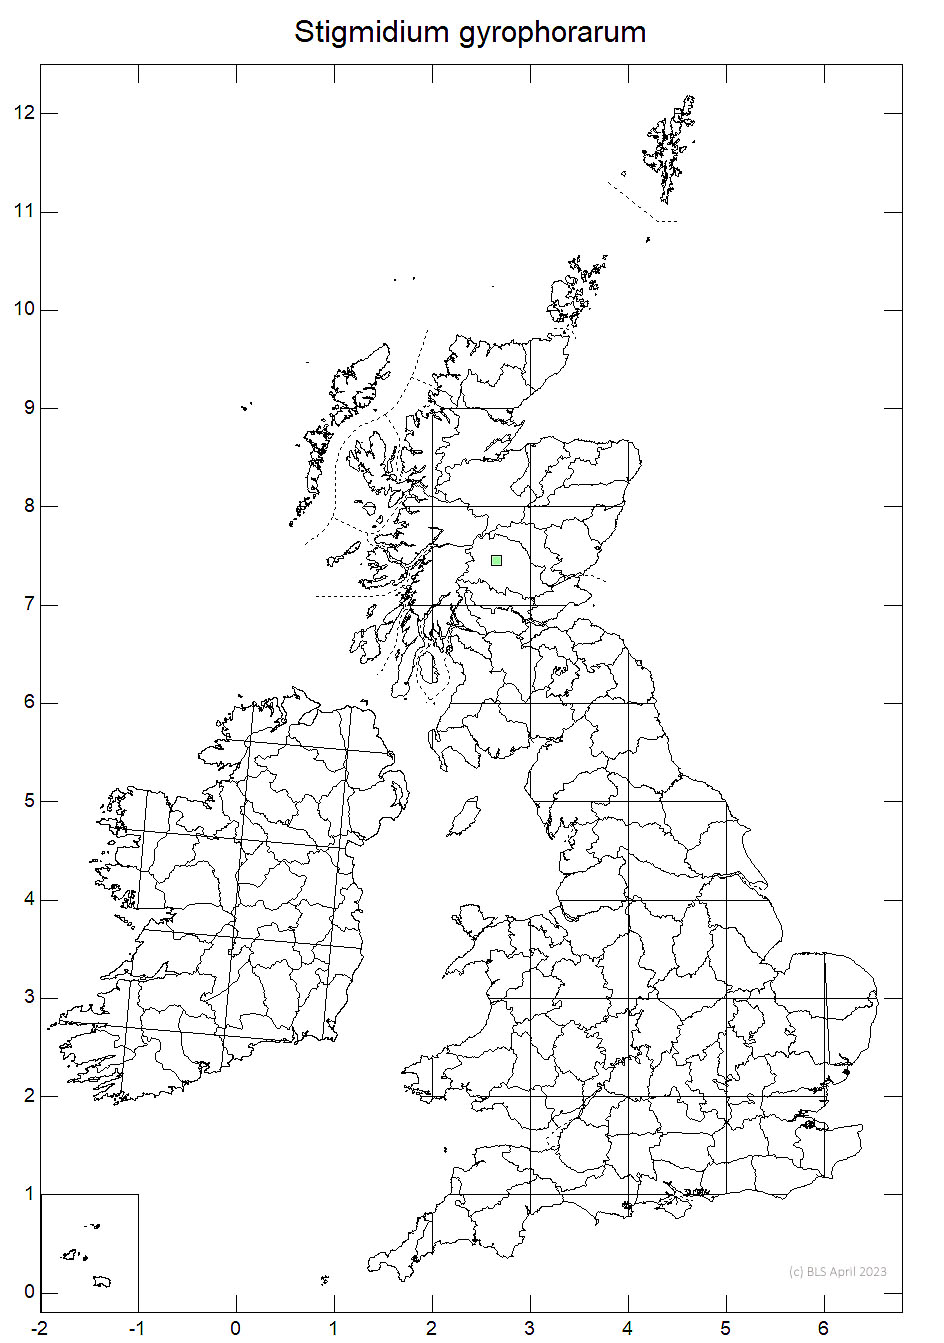 Stigmidium gyrophorarum 10km sq distribution map